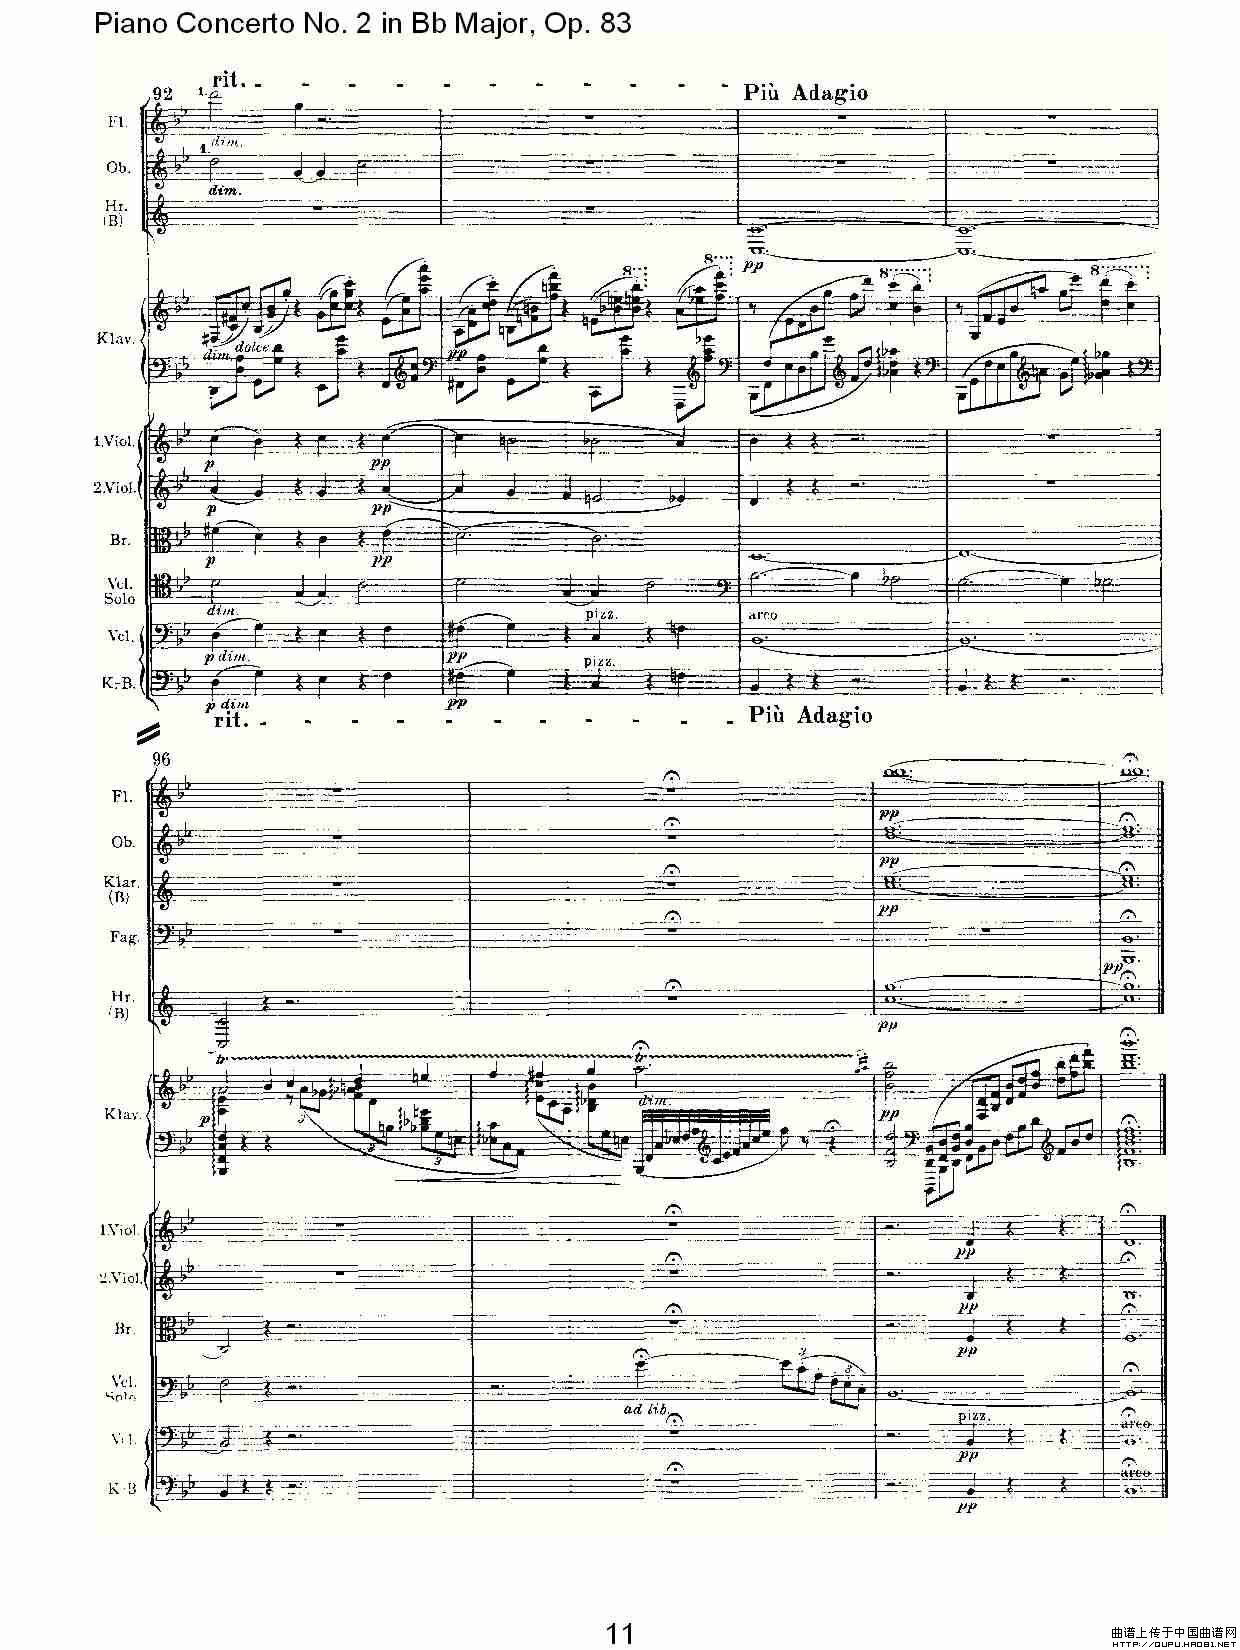 Bb大调钢琴第二协奏曲, Op.83第三乐章